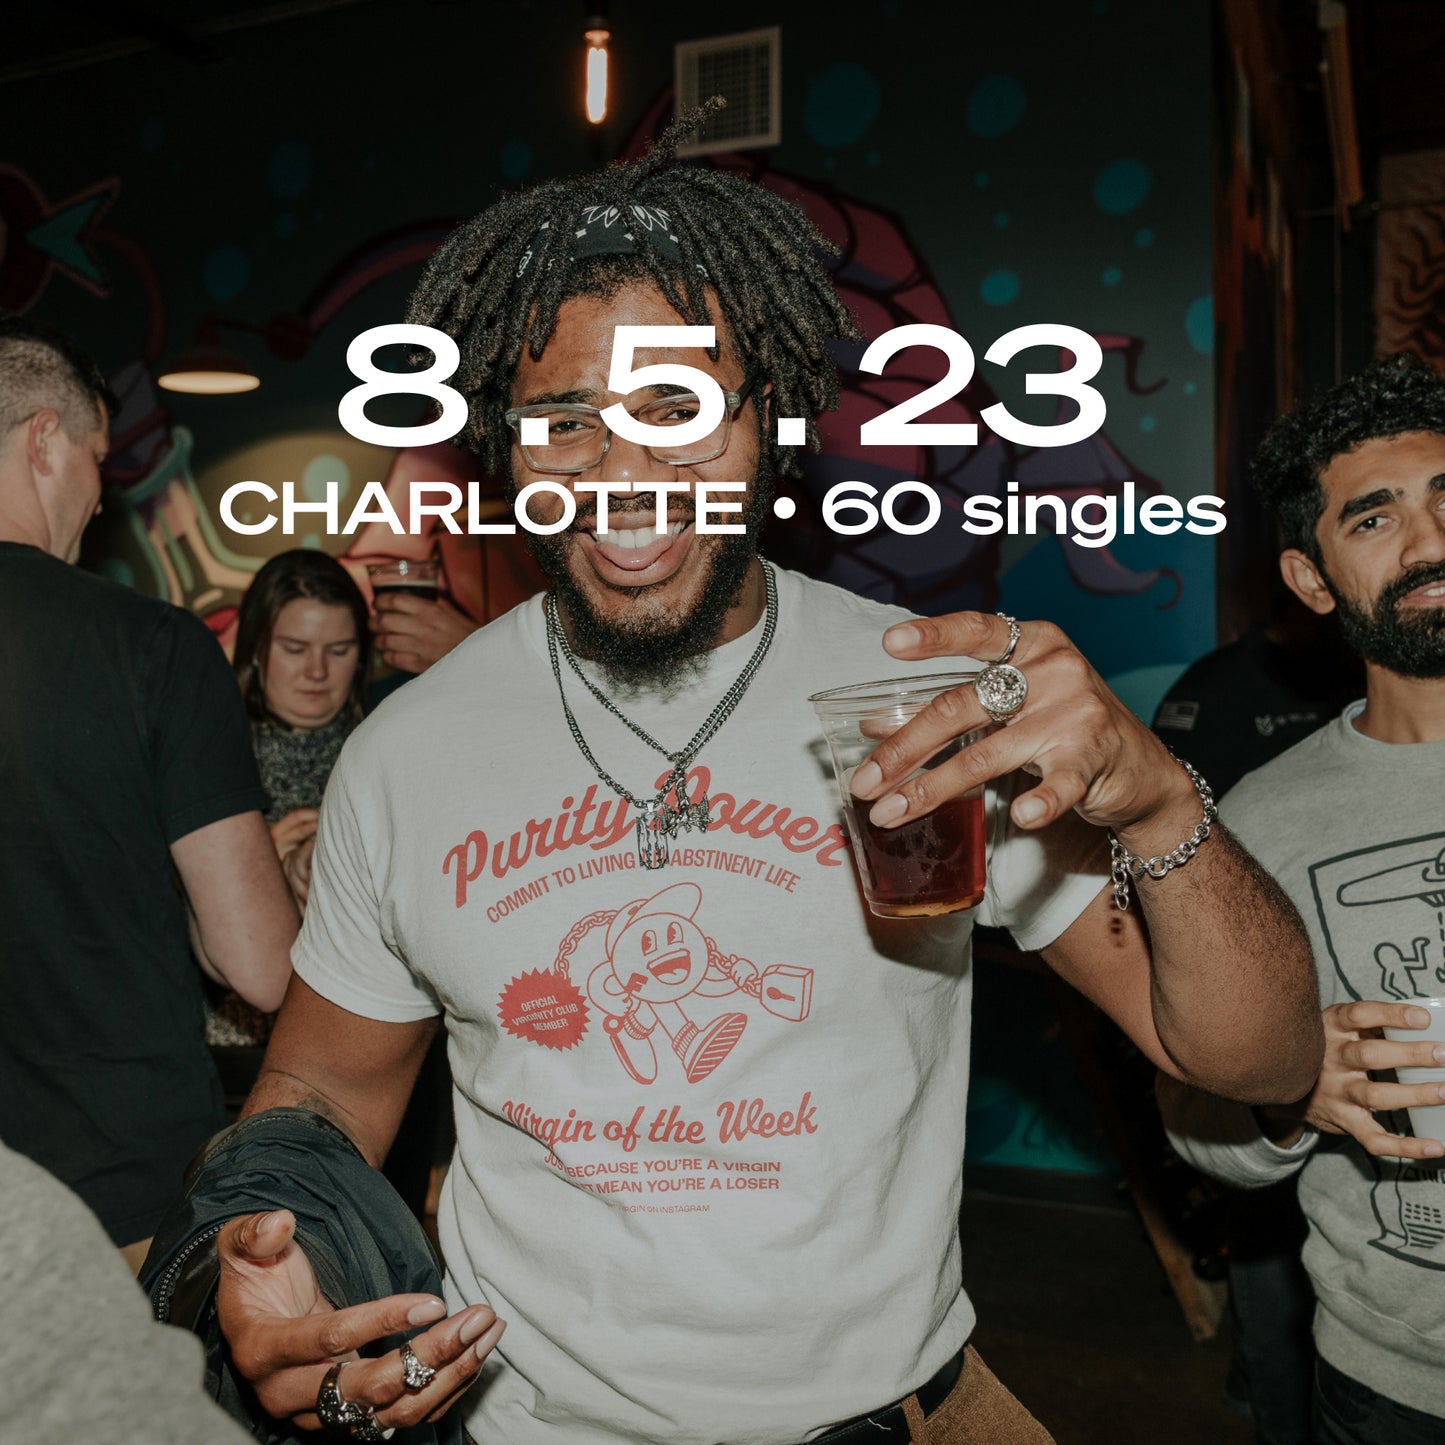 Charlotte: Singles Happy Hour